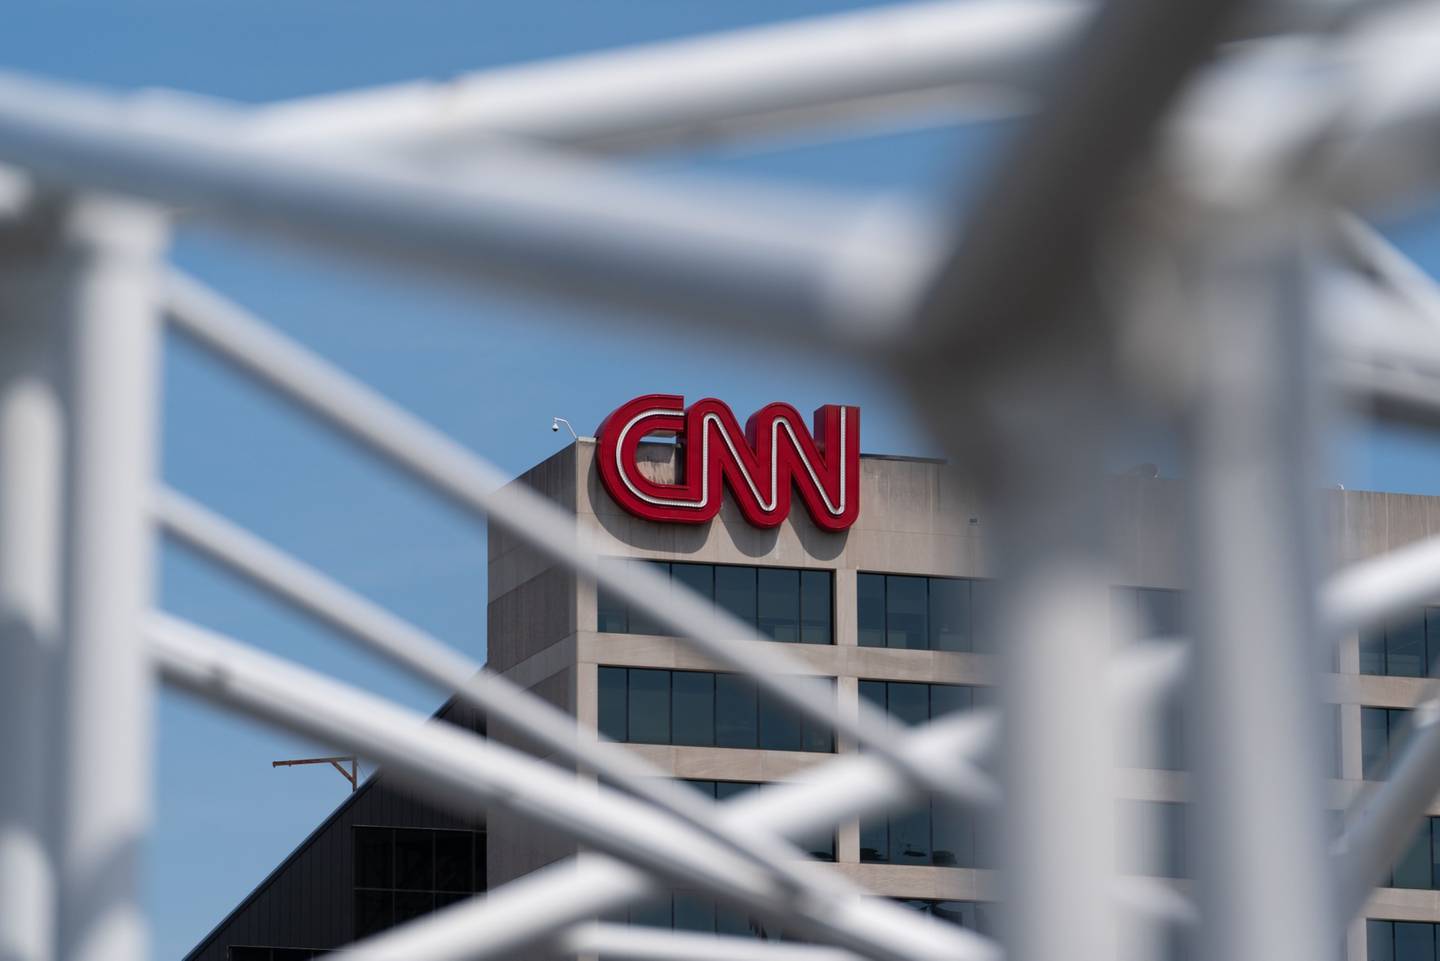 The CNN building in Atlanta, Georgia.